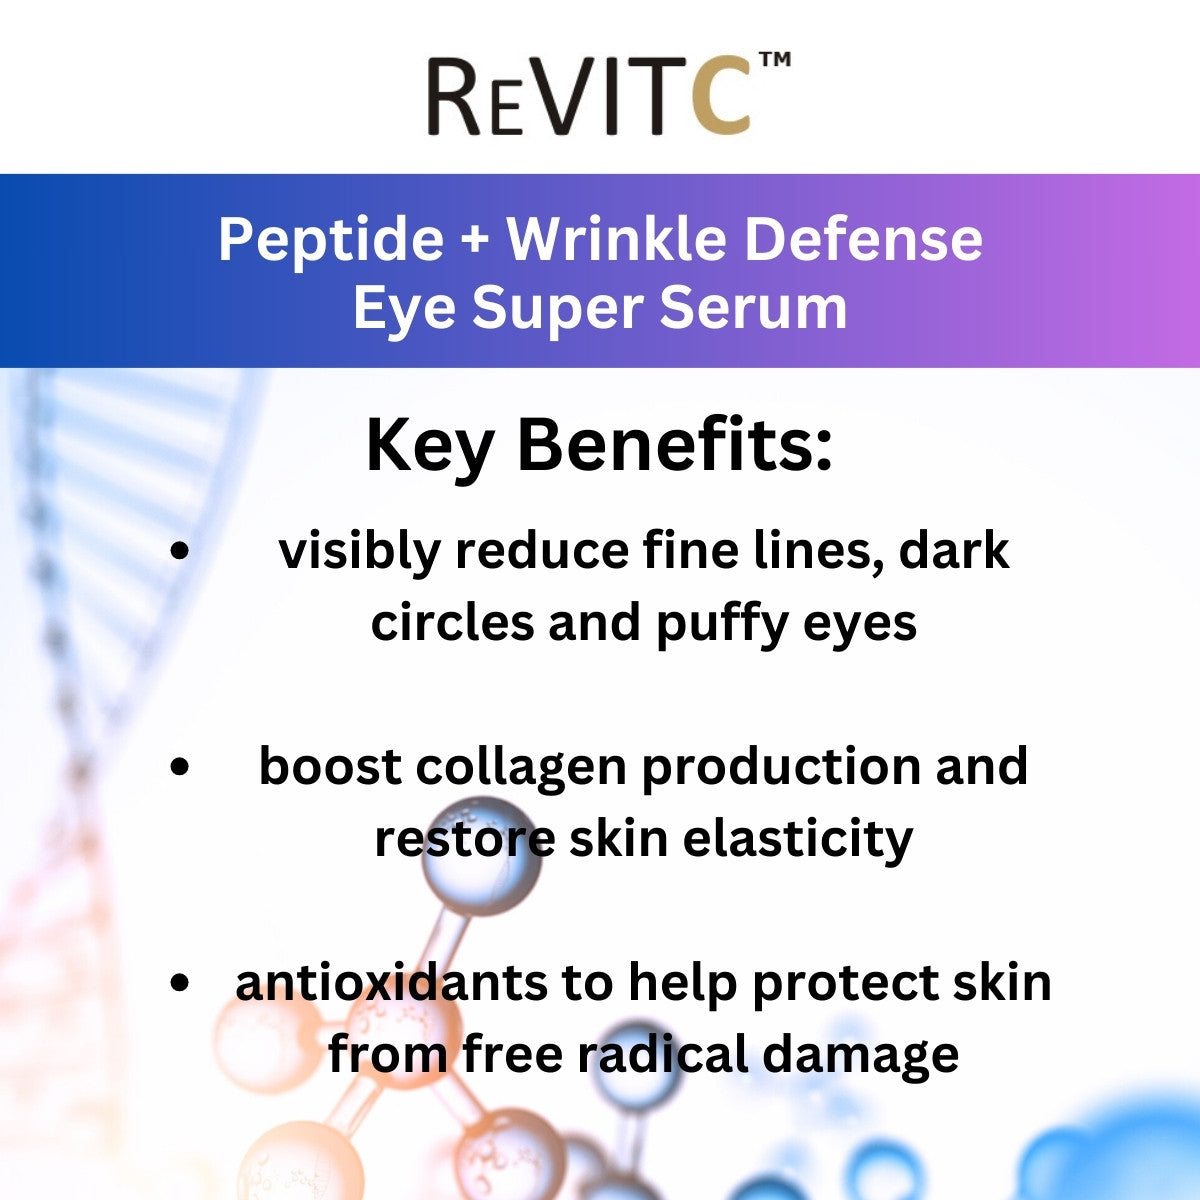 ReVITC Peptide + Wrinkle Defense Eye Super Serum